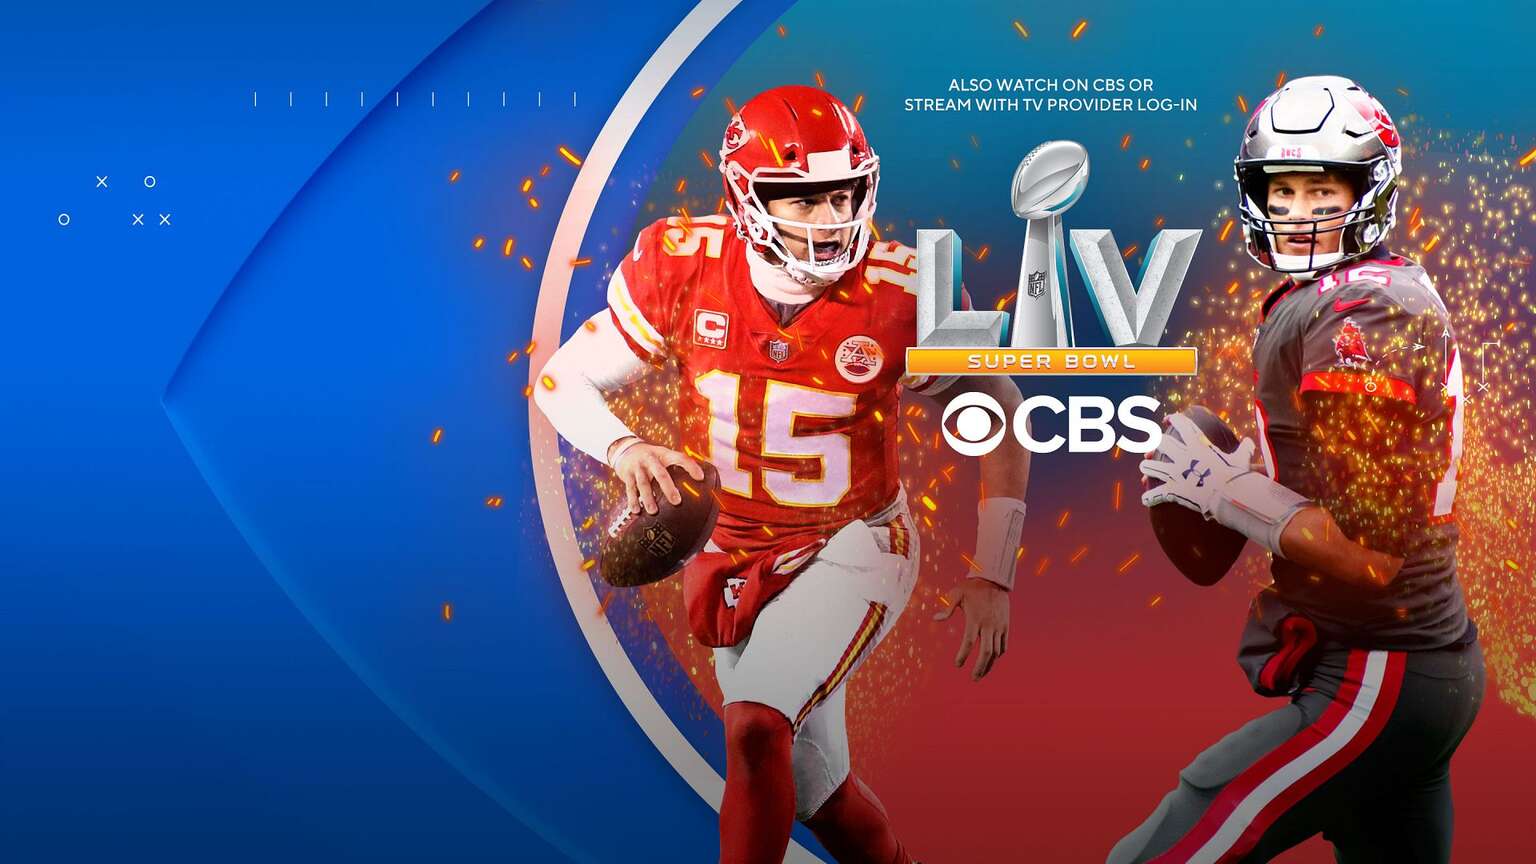 Super Bowl LV (55) Live Online - Official CBS Broadcast Stream - Sunday,  Feb 7, 2021 